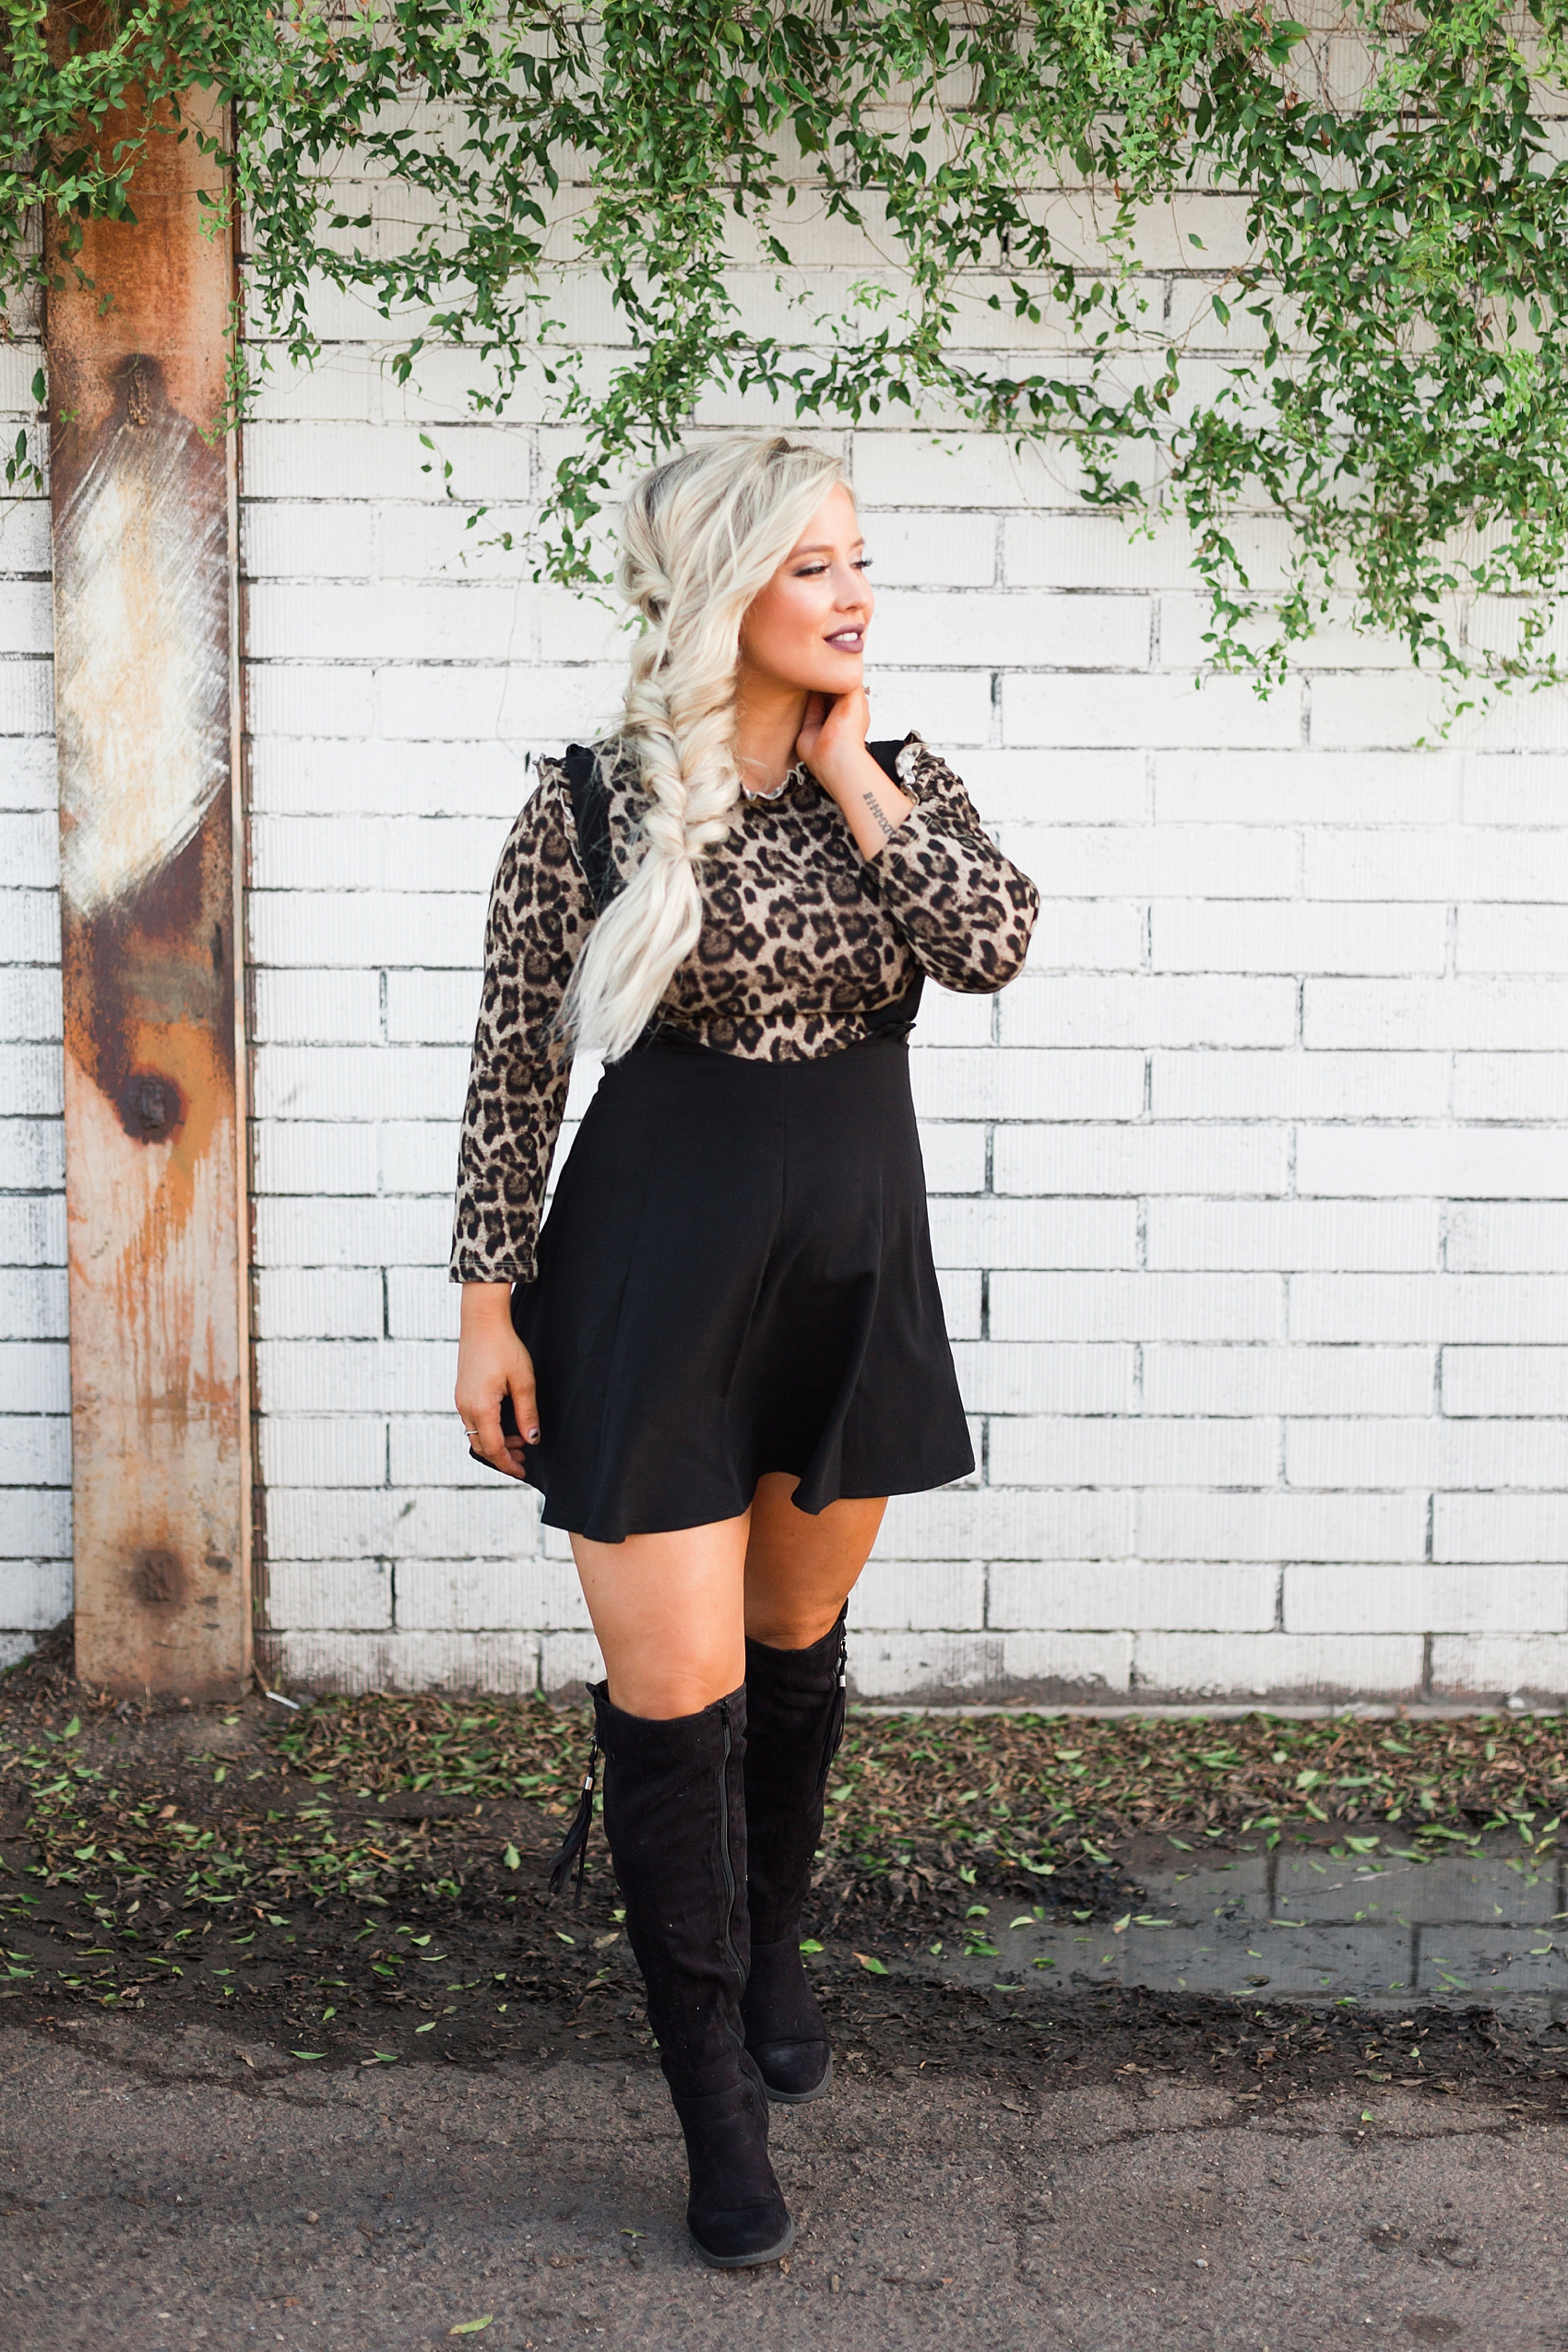 Leah Hope Photography | Downtown Phoenix Arizona | Fashion | What to Wear | Fashion Blogger | Stylist | Portraits | Head Shots | Modeling | Sisters | Influencer | Women's Fashion